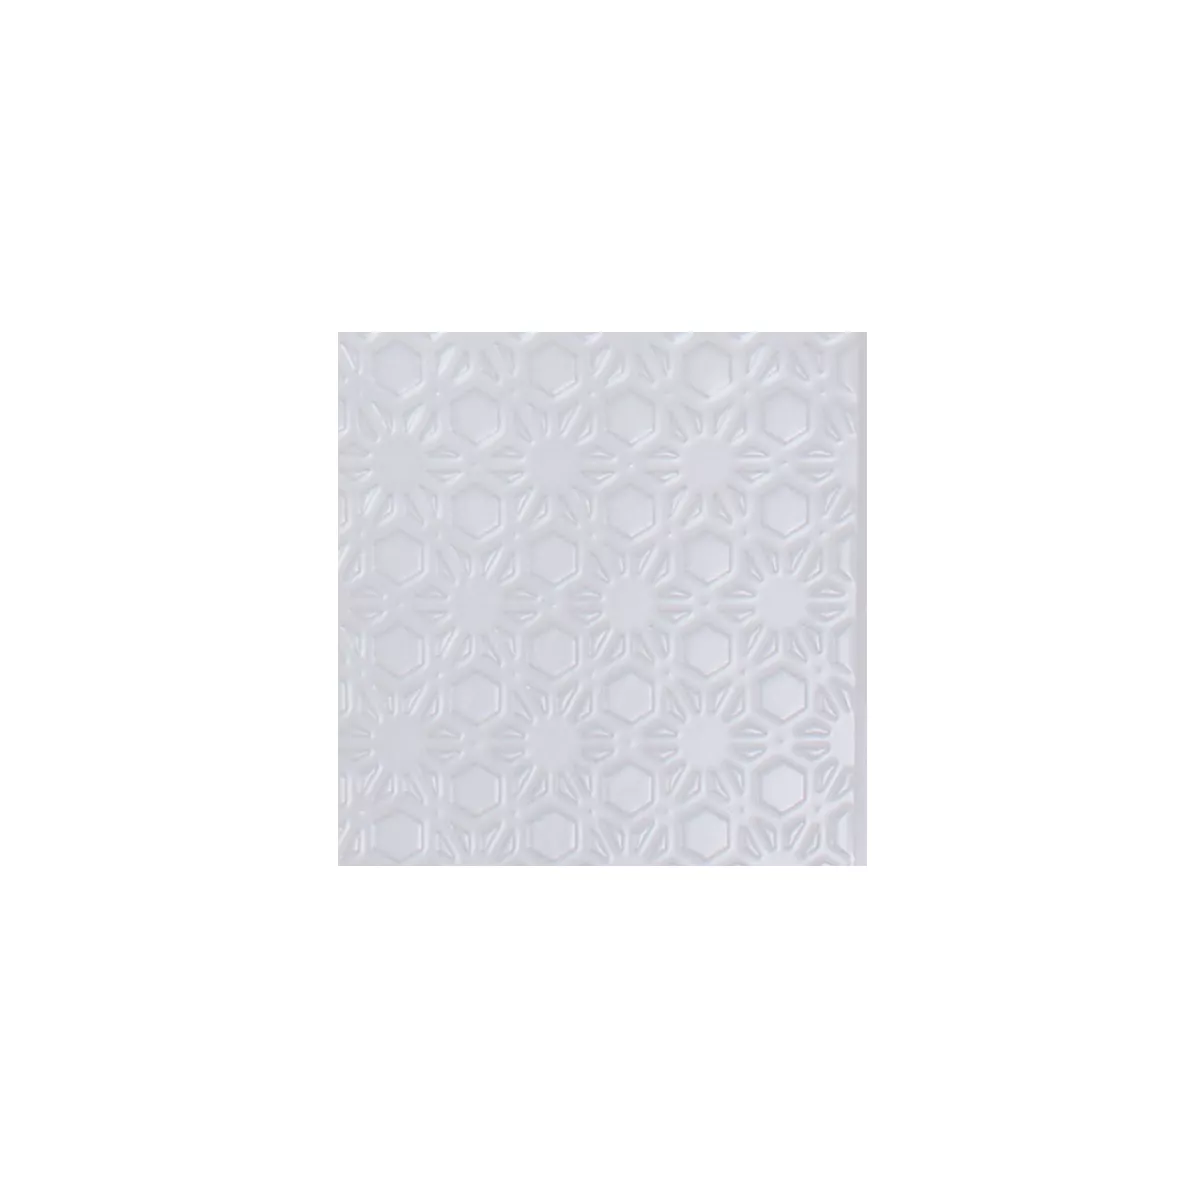 Sample Mosaic Tiles Ceramic Istria White